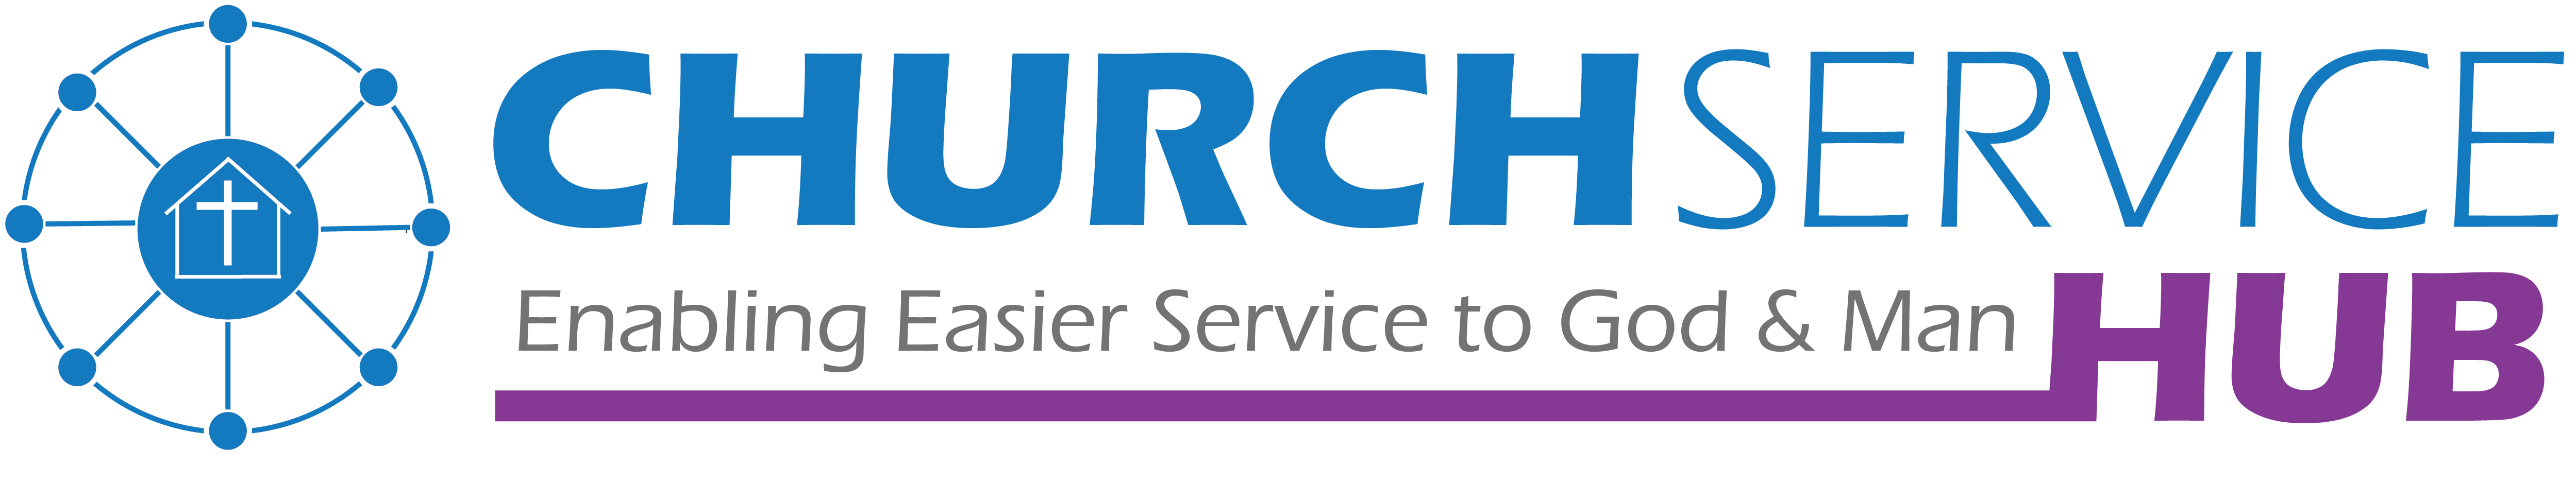 Church Service Hub